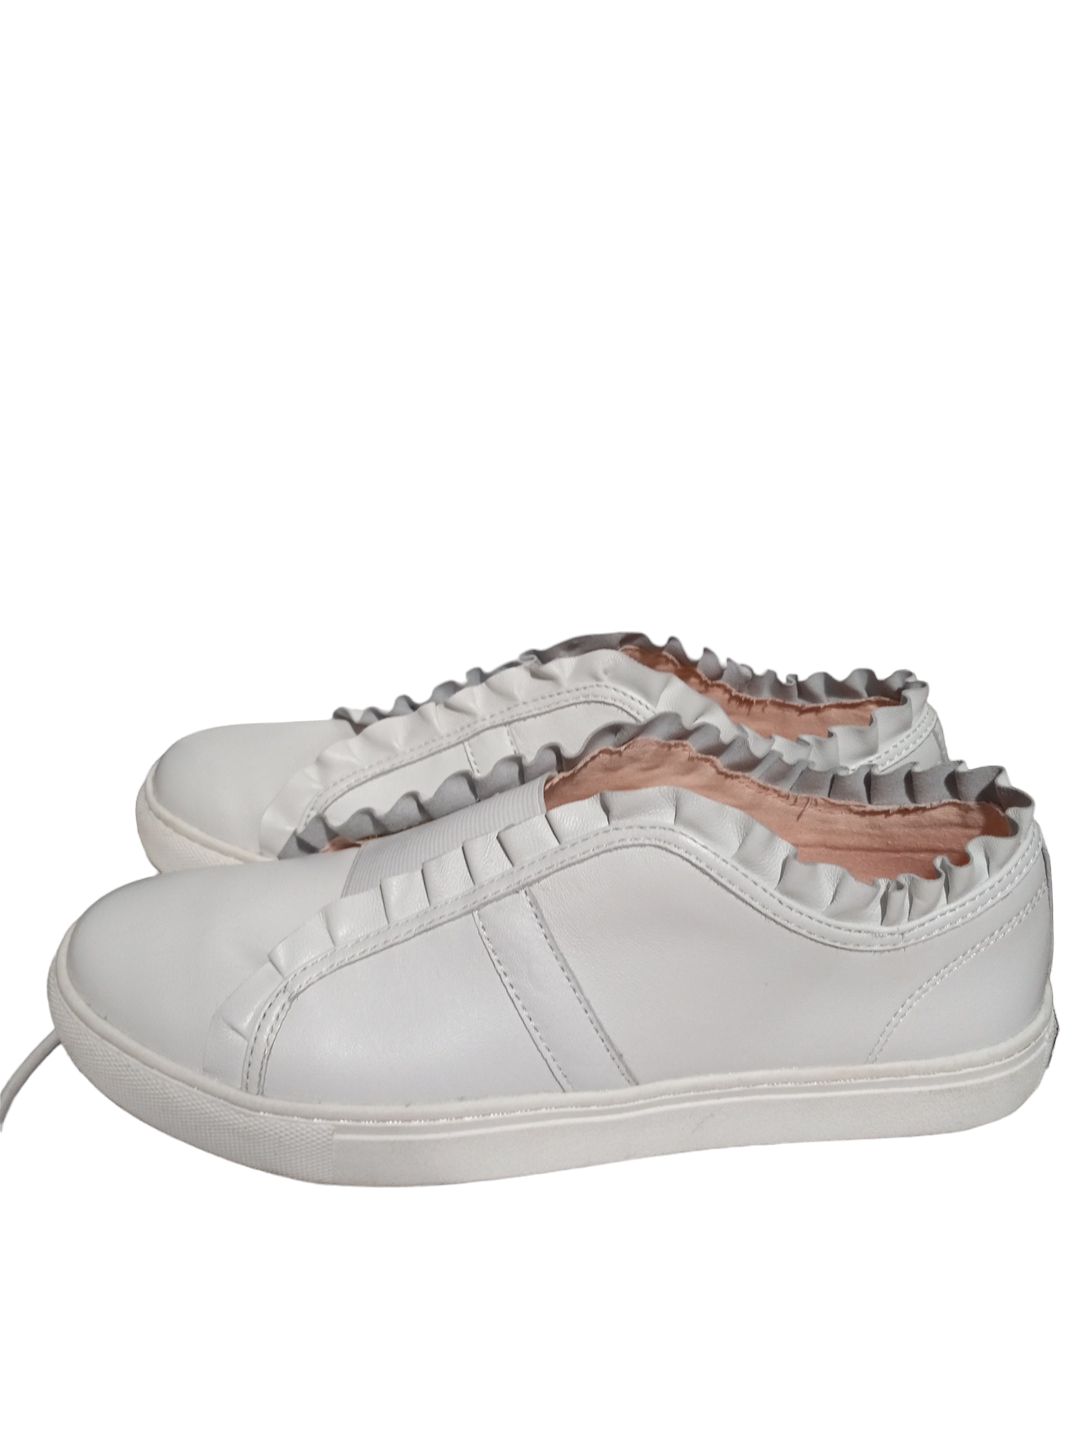 White Shoes Flats Kate Spade, Size 7.5